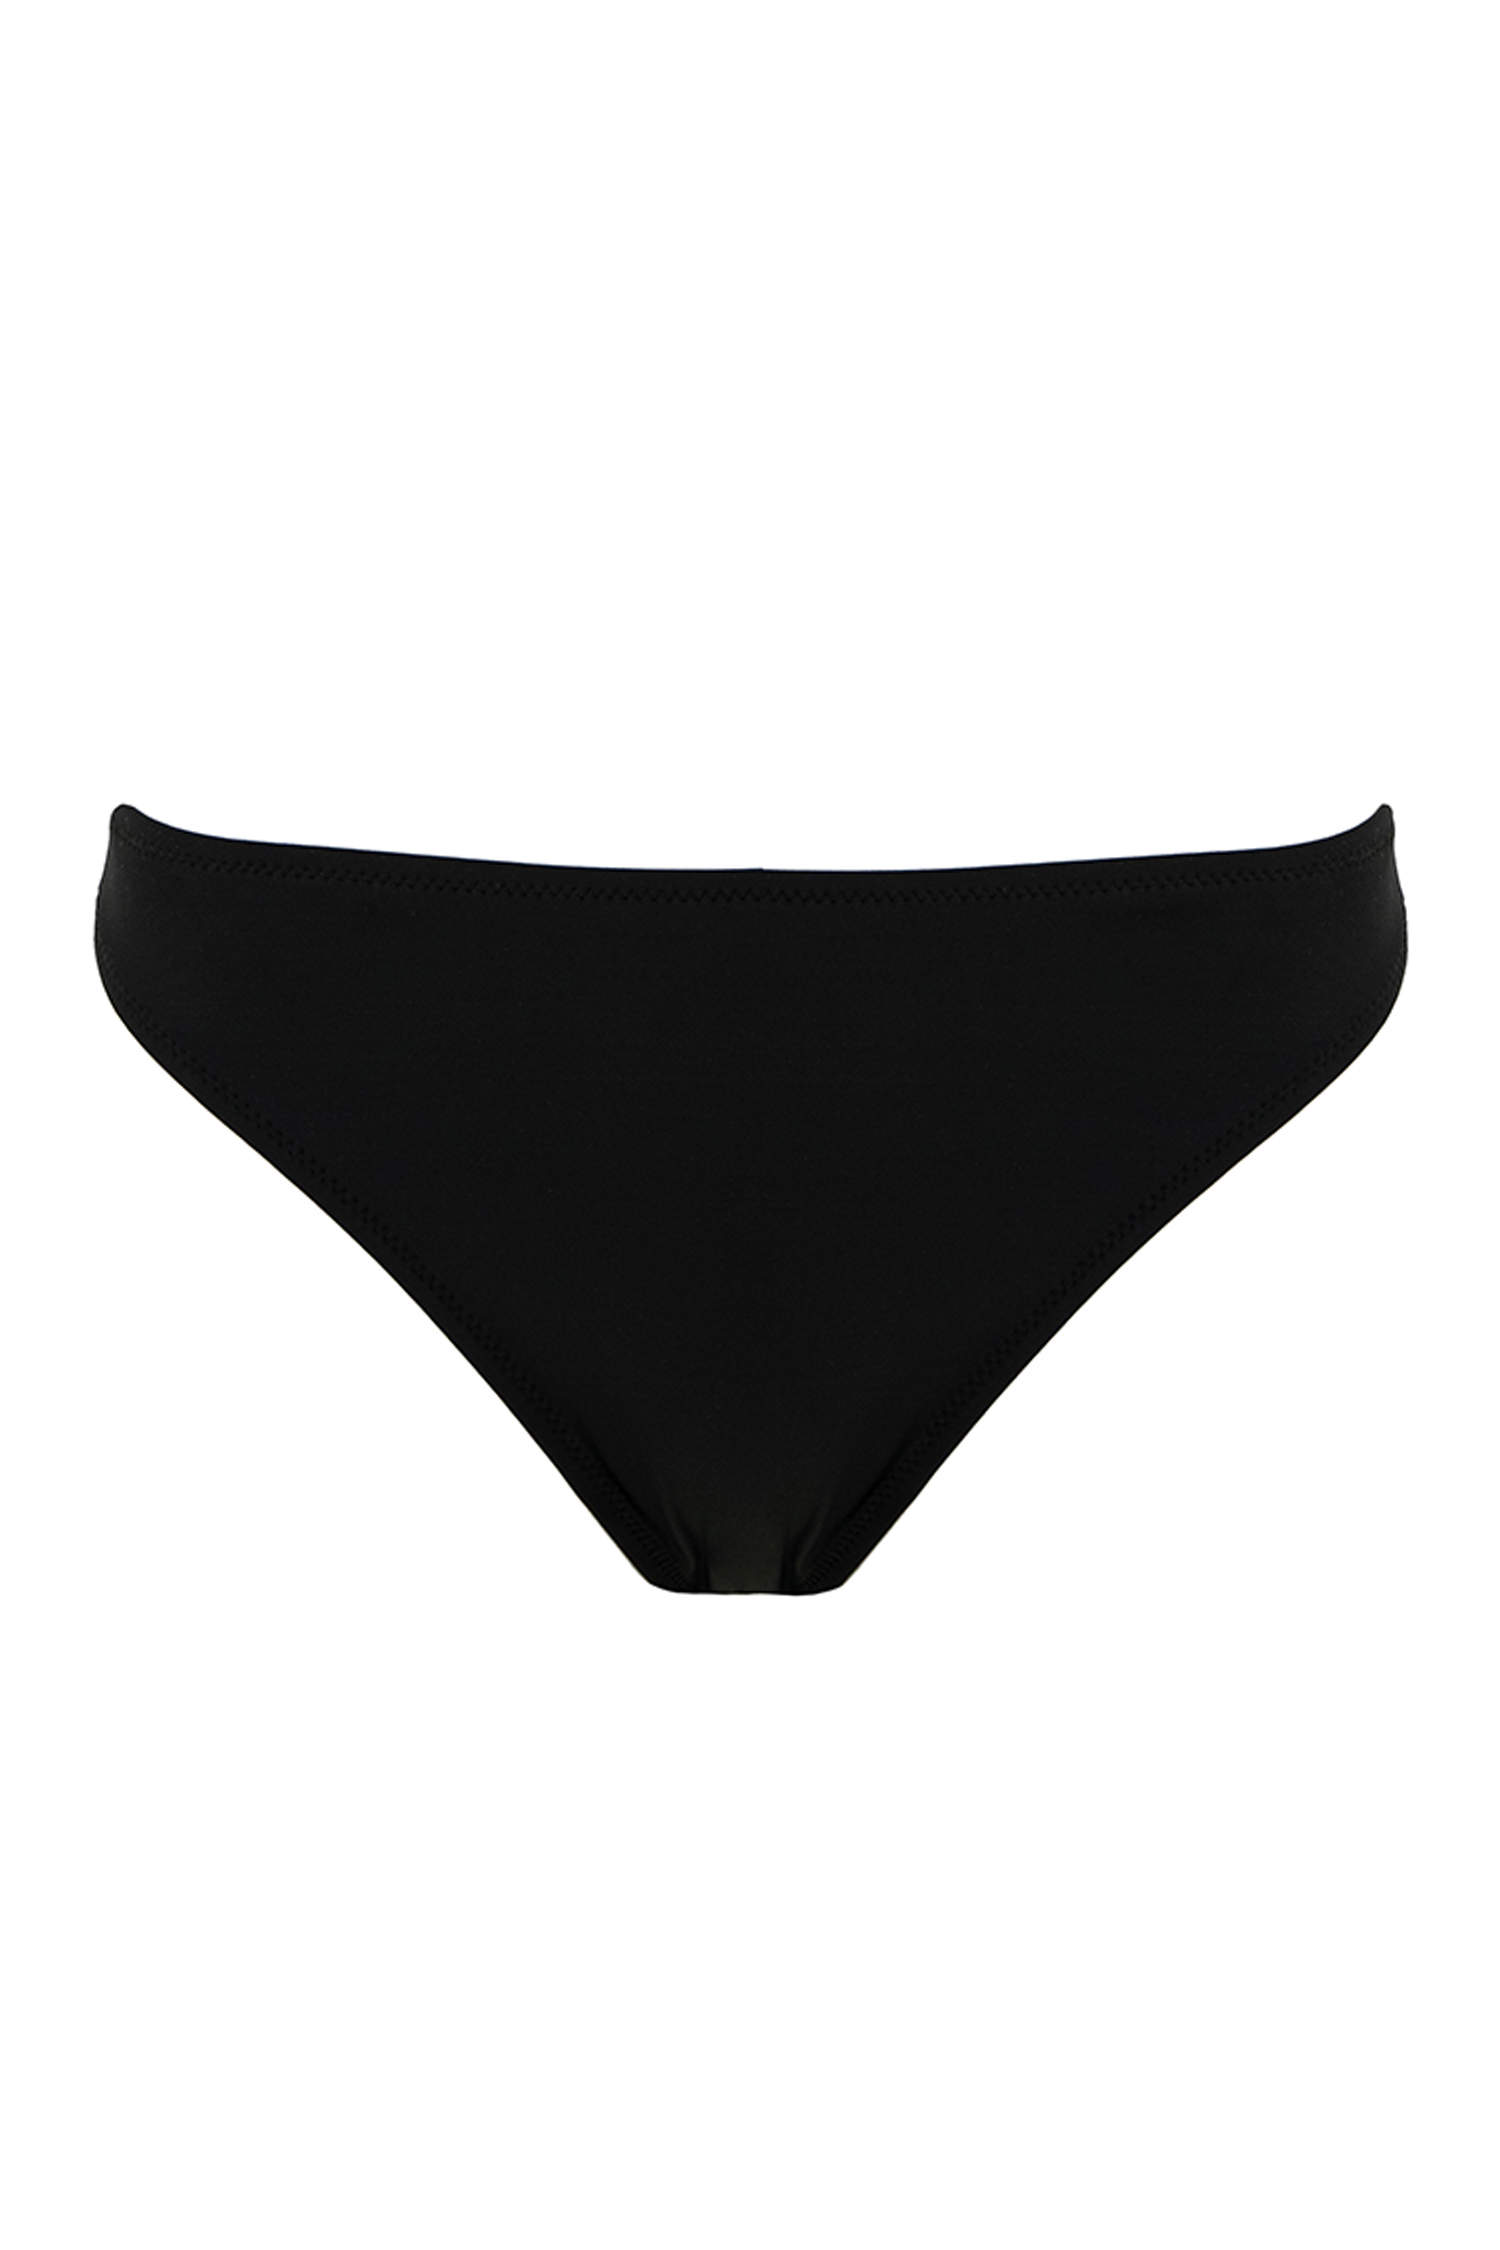 Khaki WOMAN Fall in Love Regular Fit Bikini Bottom 1835469 | DeFacto